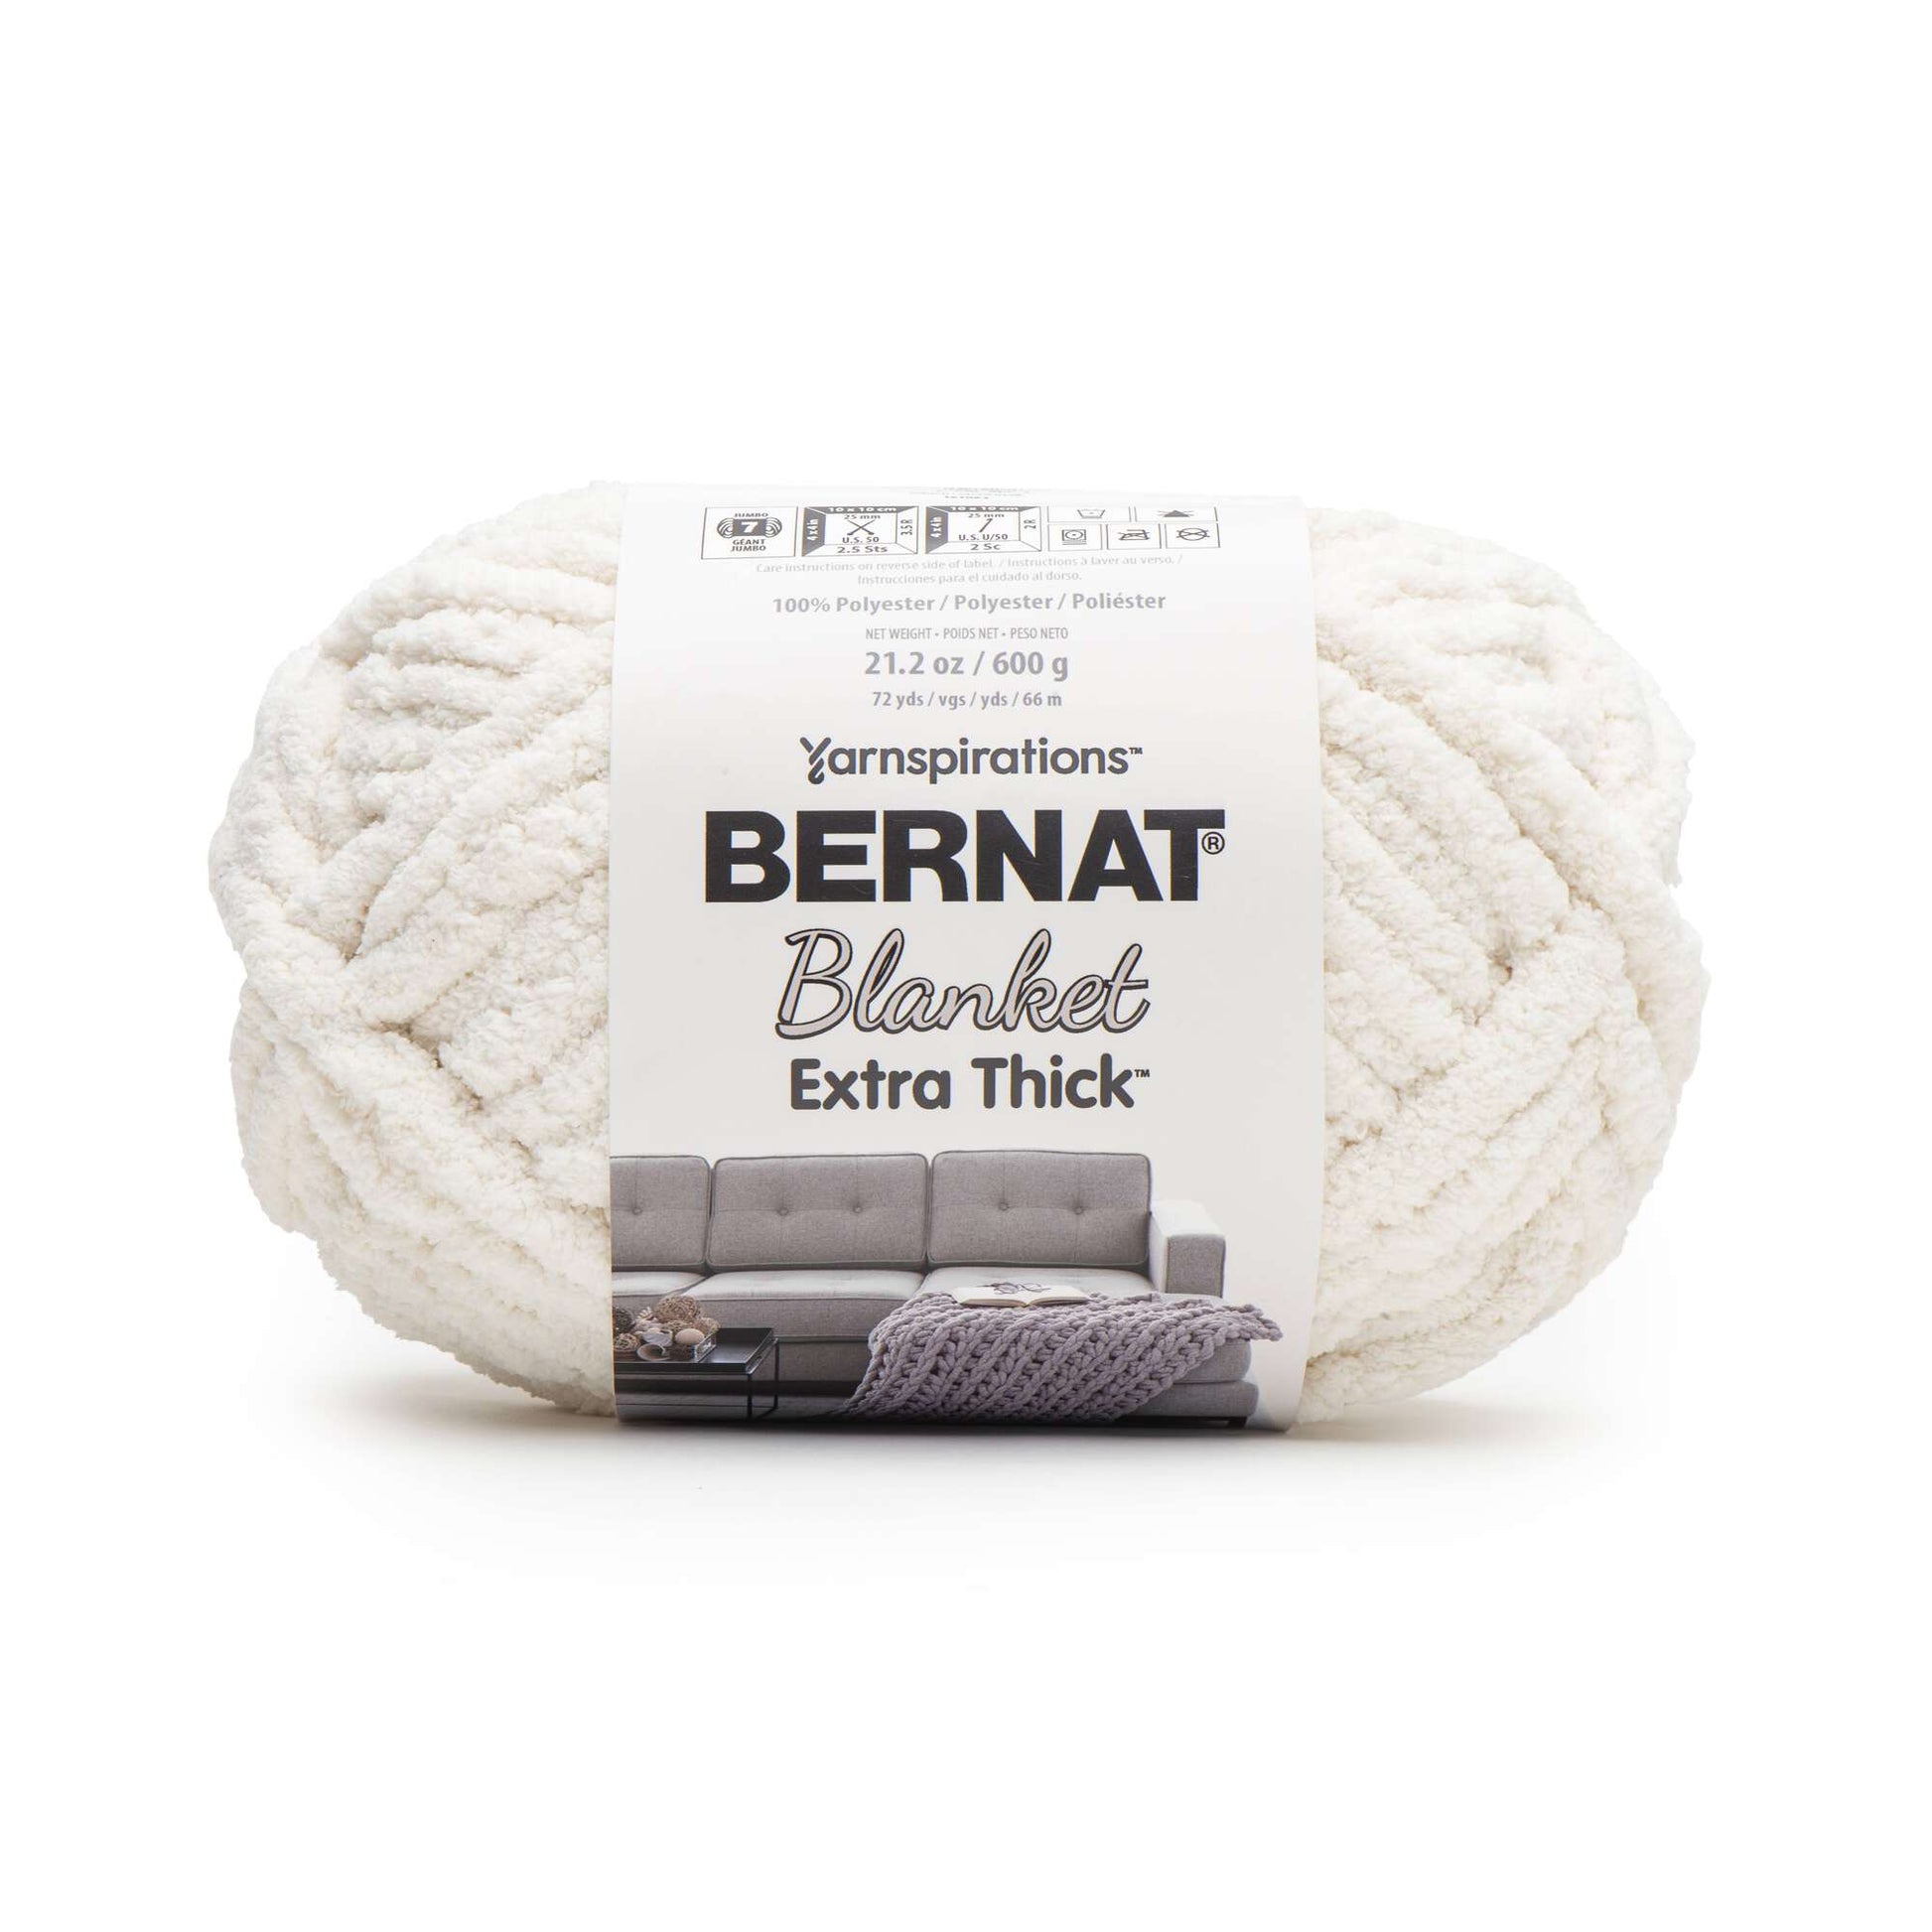 Bernat Blanket Extra Thick Yarn (600g/21.2oz) - Discontinued Shades Vintage White